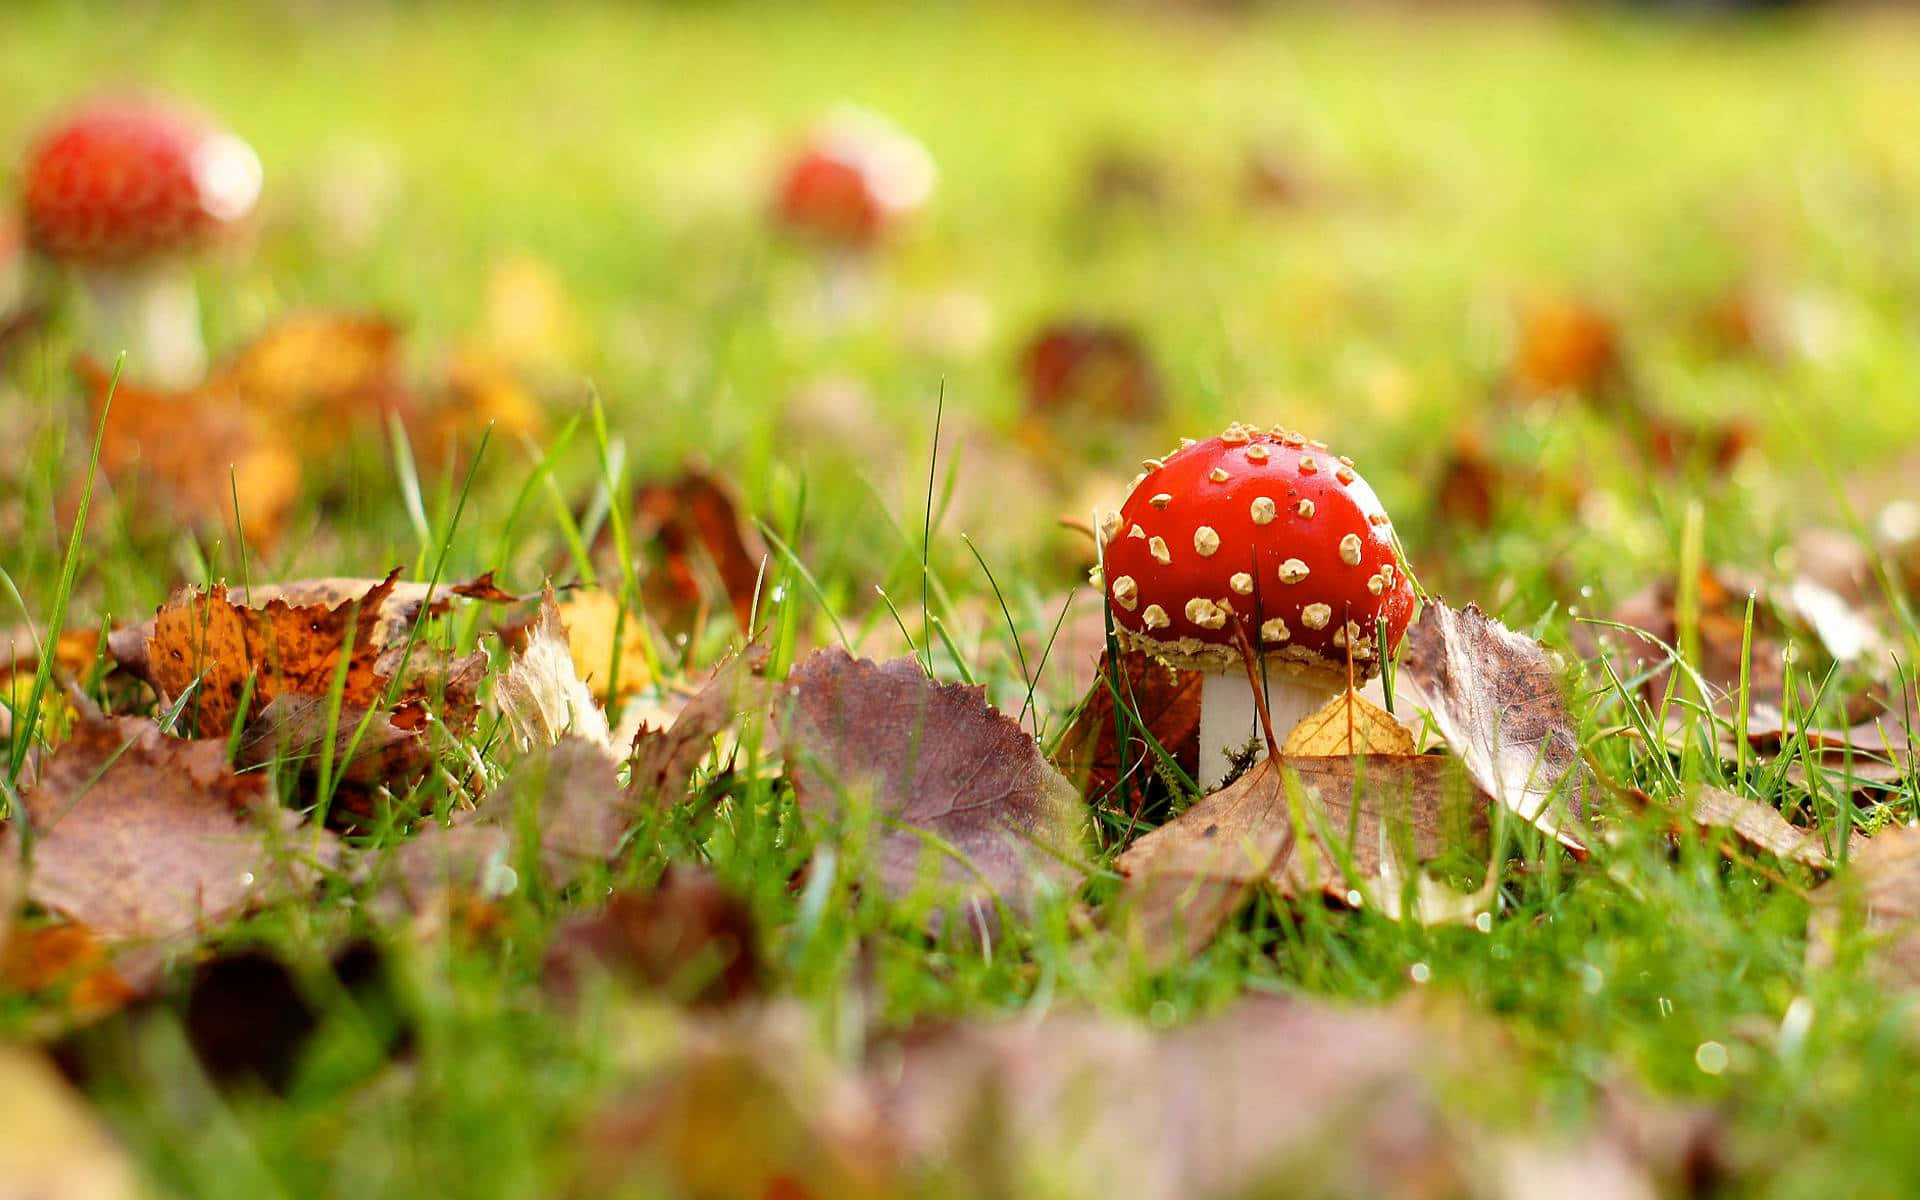 A glistening, wet mushroom brightens an autumn walk